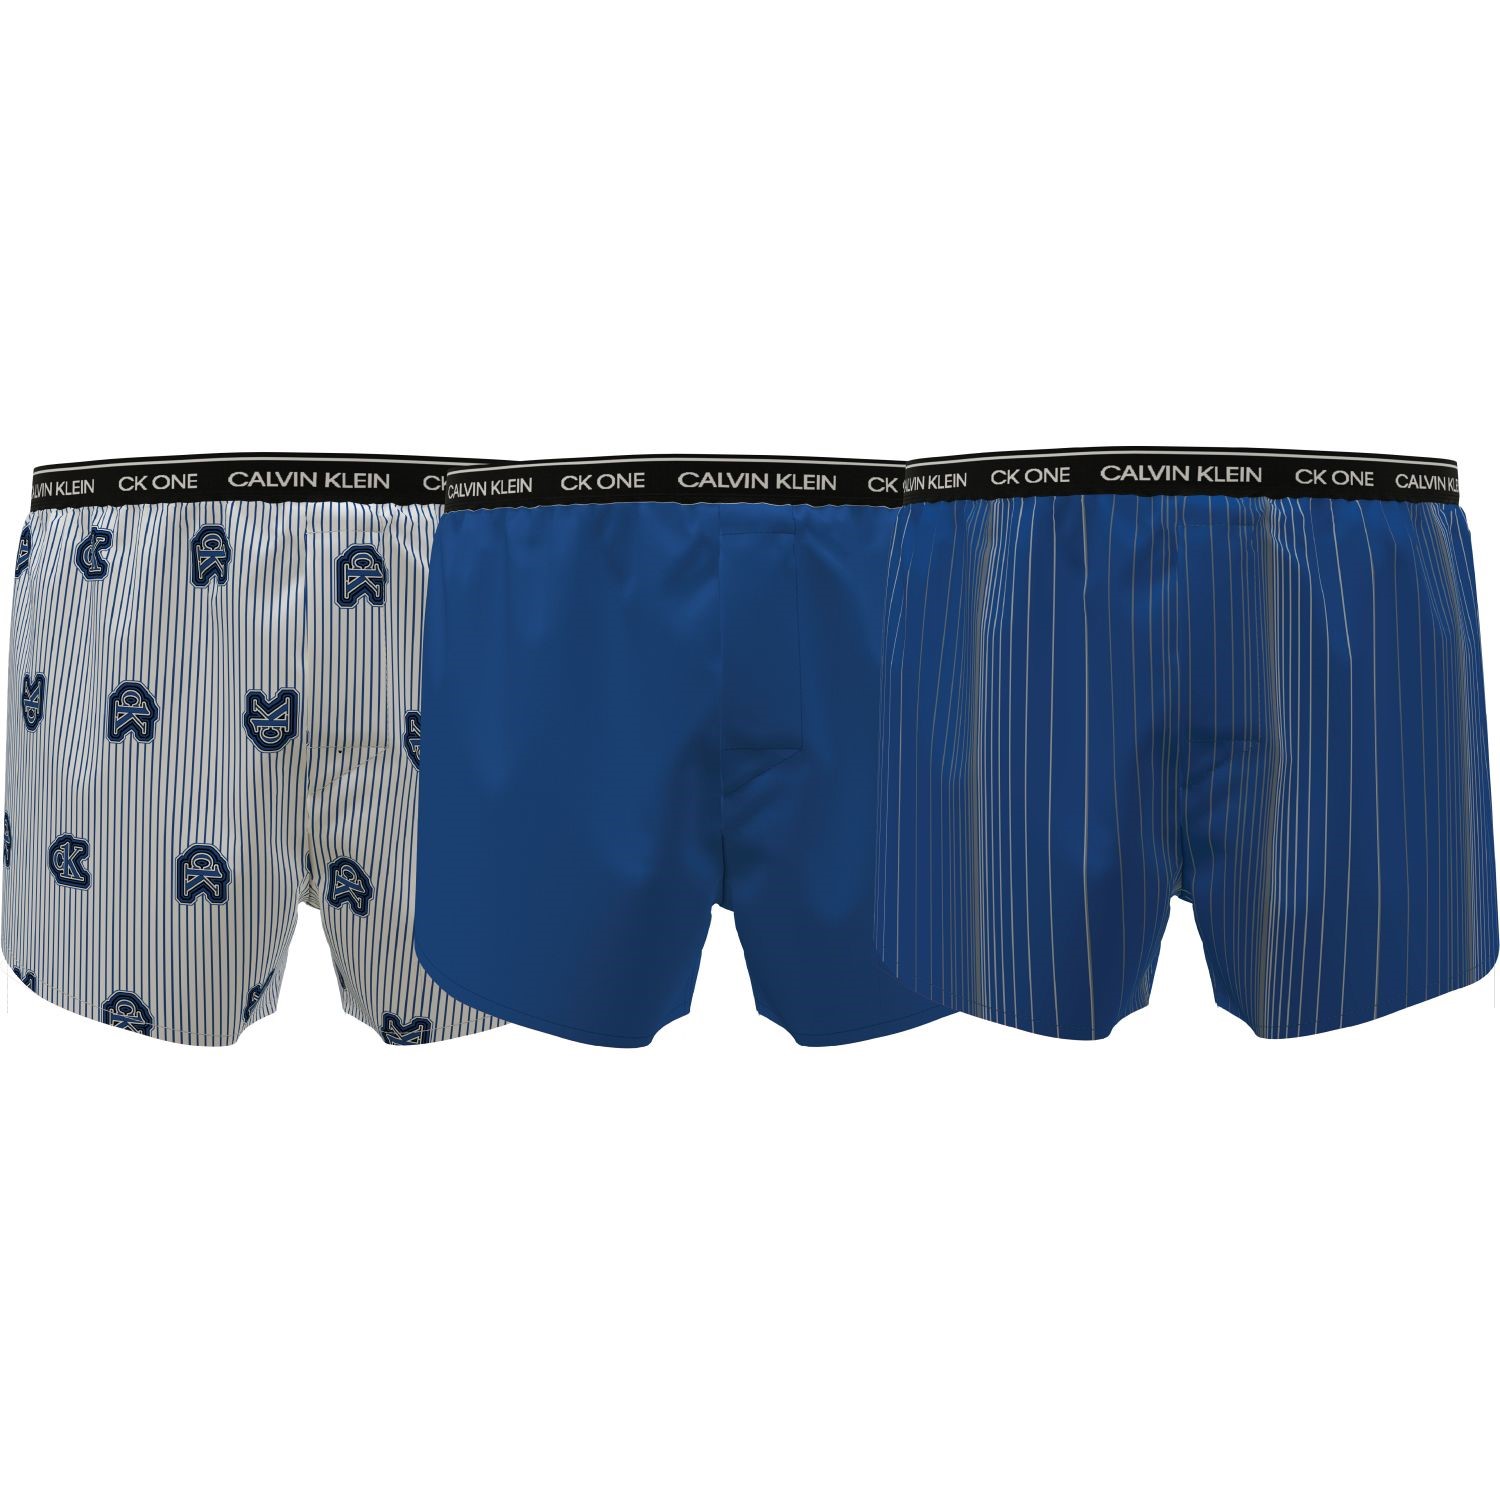 3-Pack Calvin Klein One Cotton Slim Fit Boxer - Boxer shorts - Trunks -  Underwear 